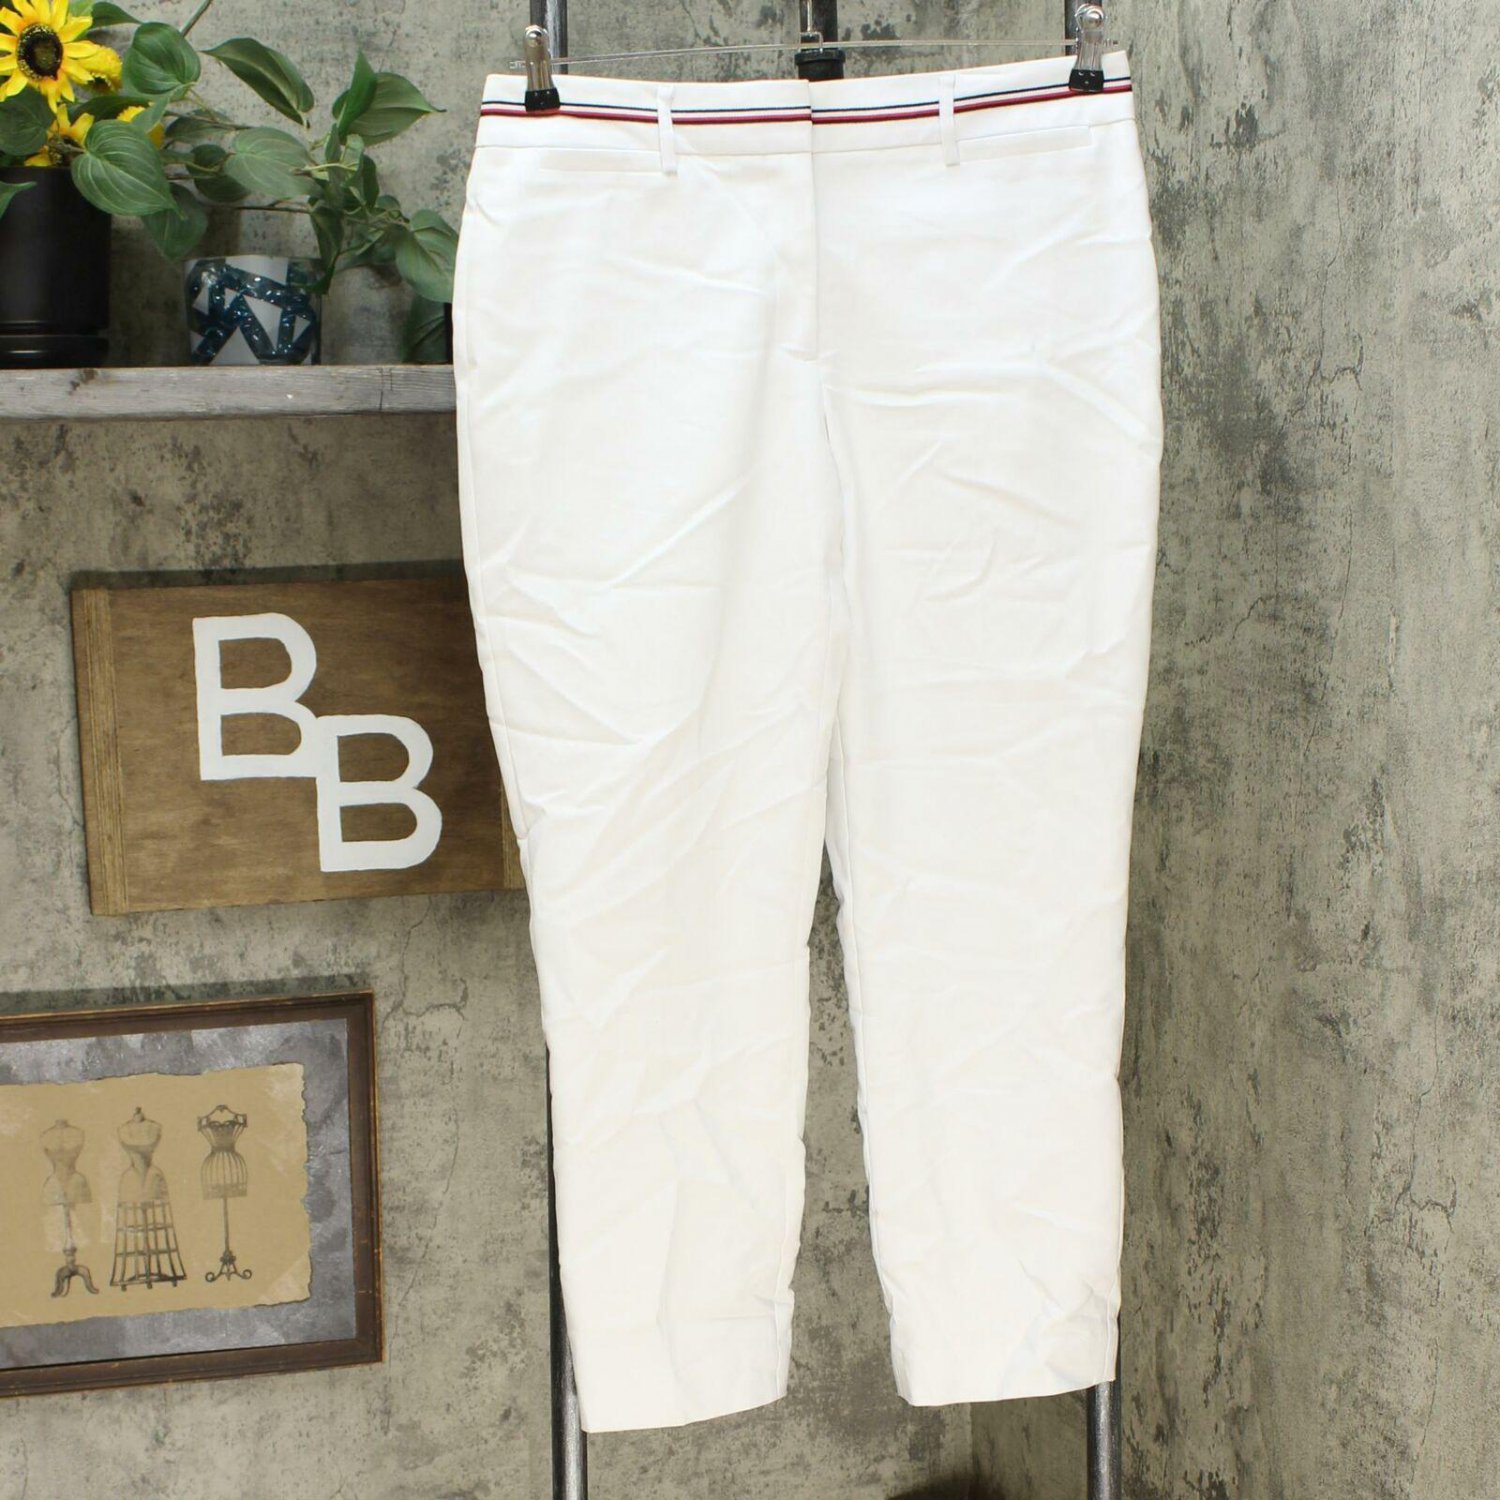 Tommy Hilfiger Women's Ribbon Trim Ankle Pants Bright White 8